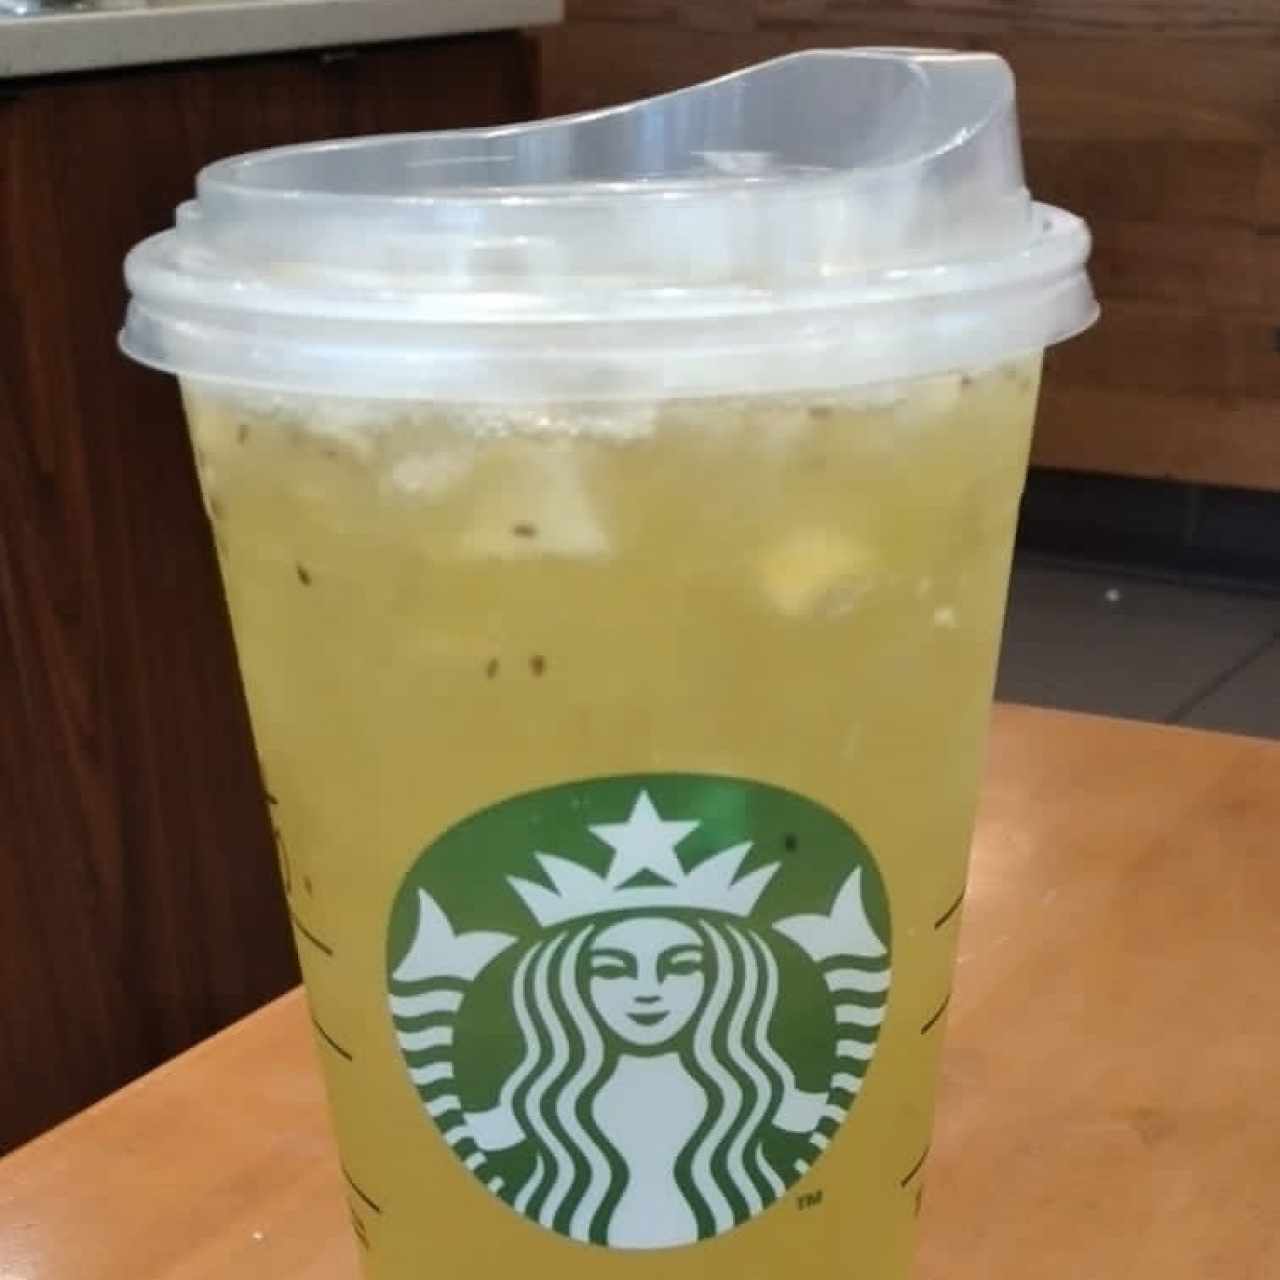 Starbucks Refresher